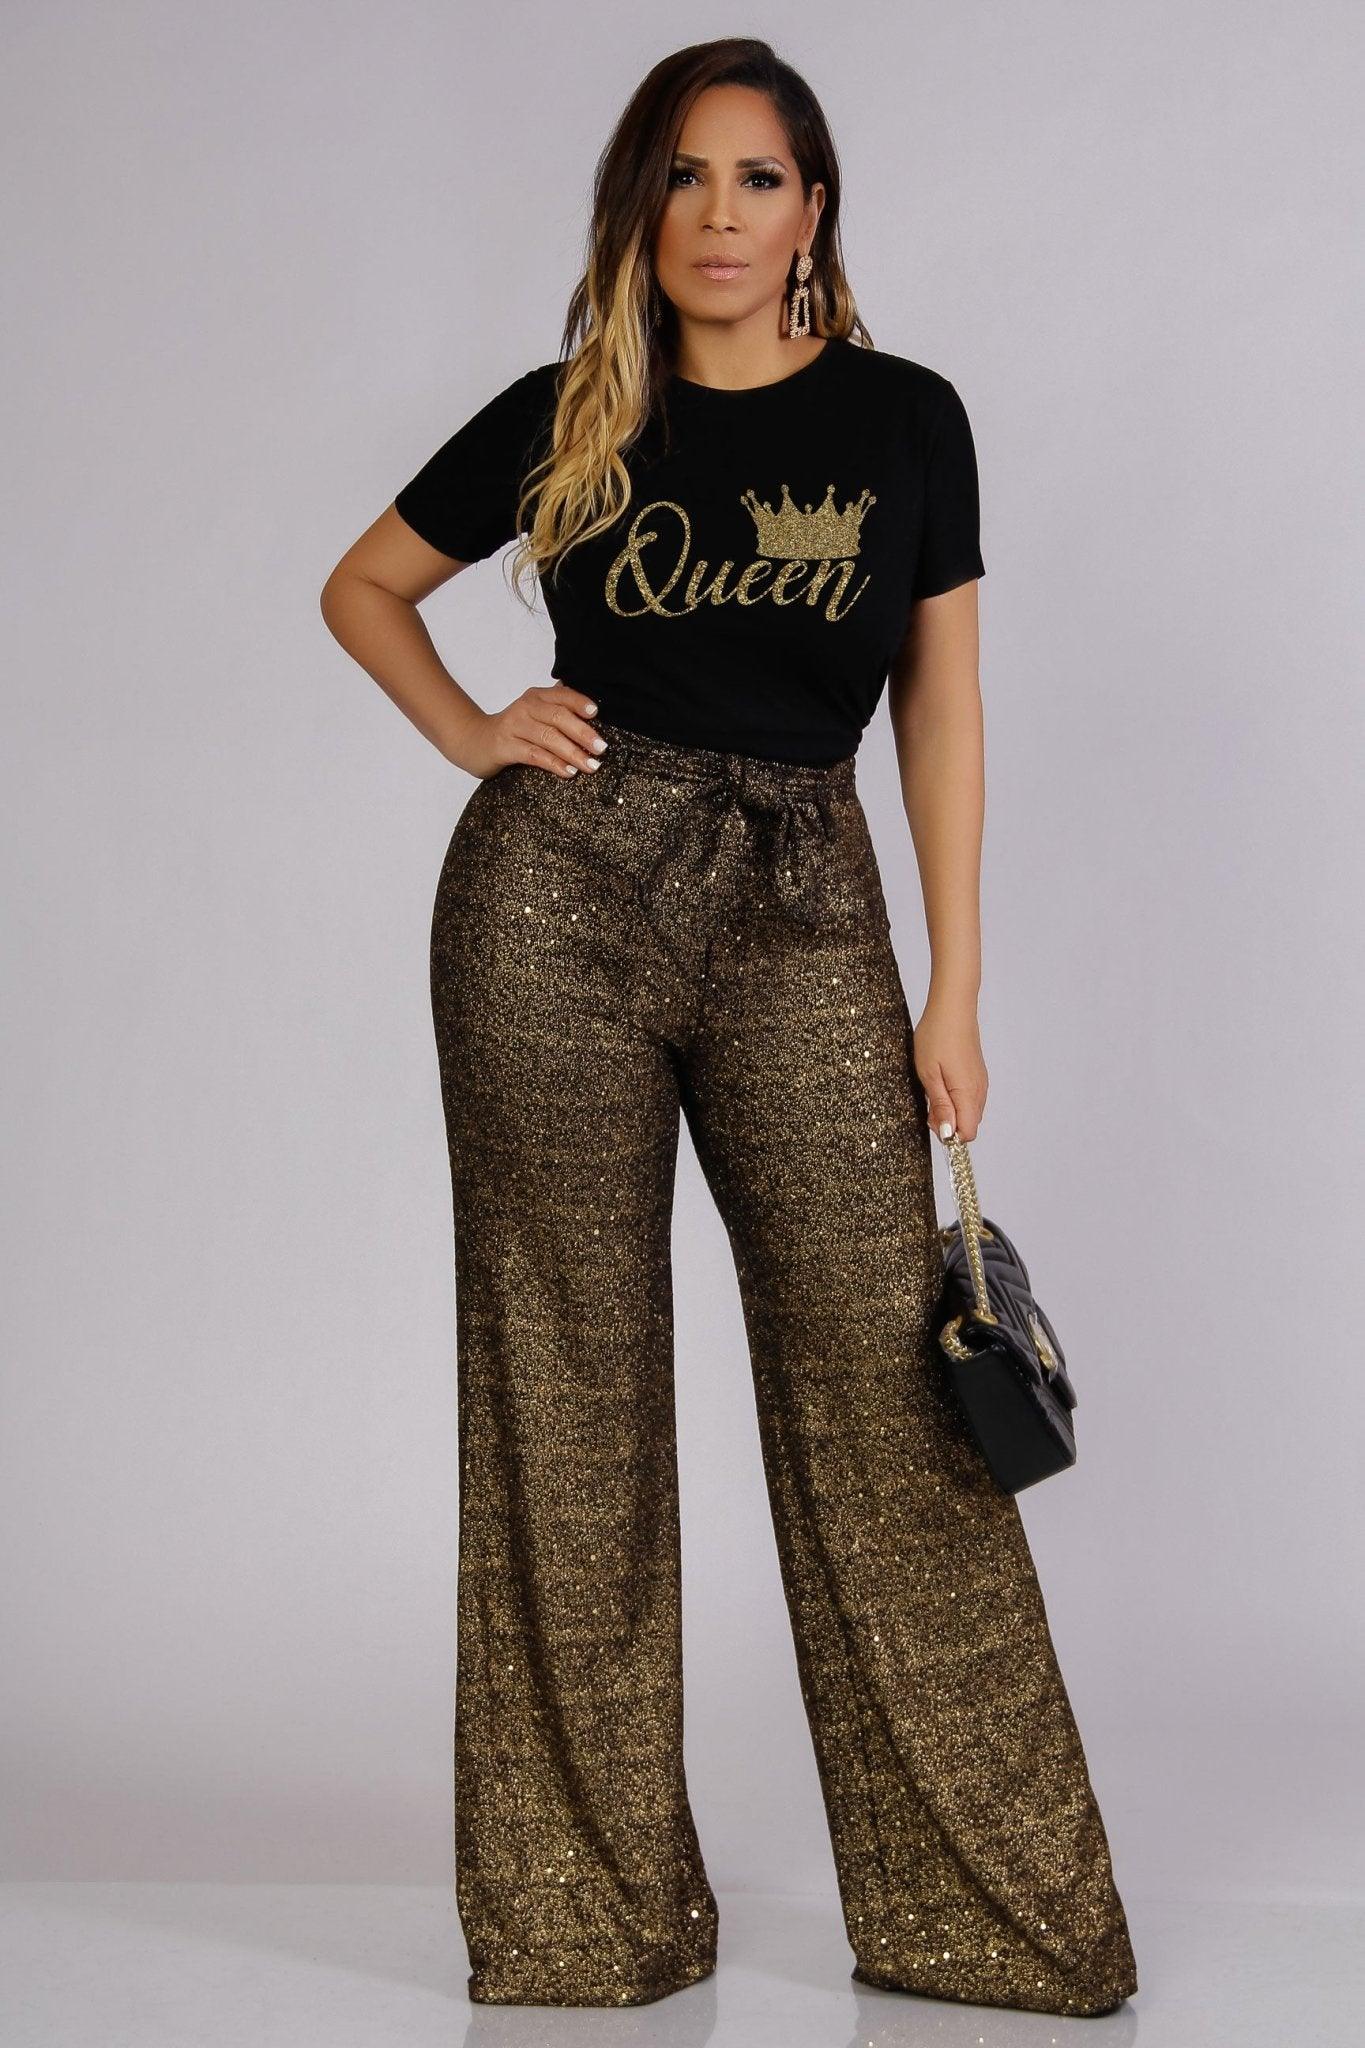 Queen Glitter Fashion Tee Shirt - MY SEXY STYLES